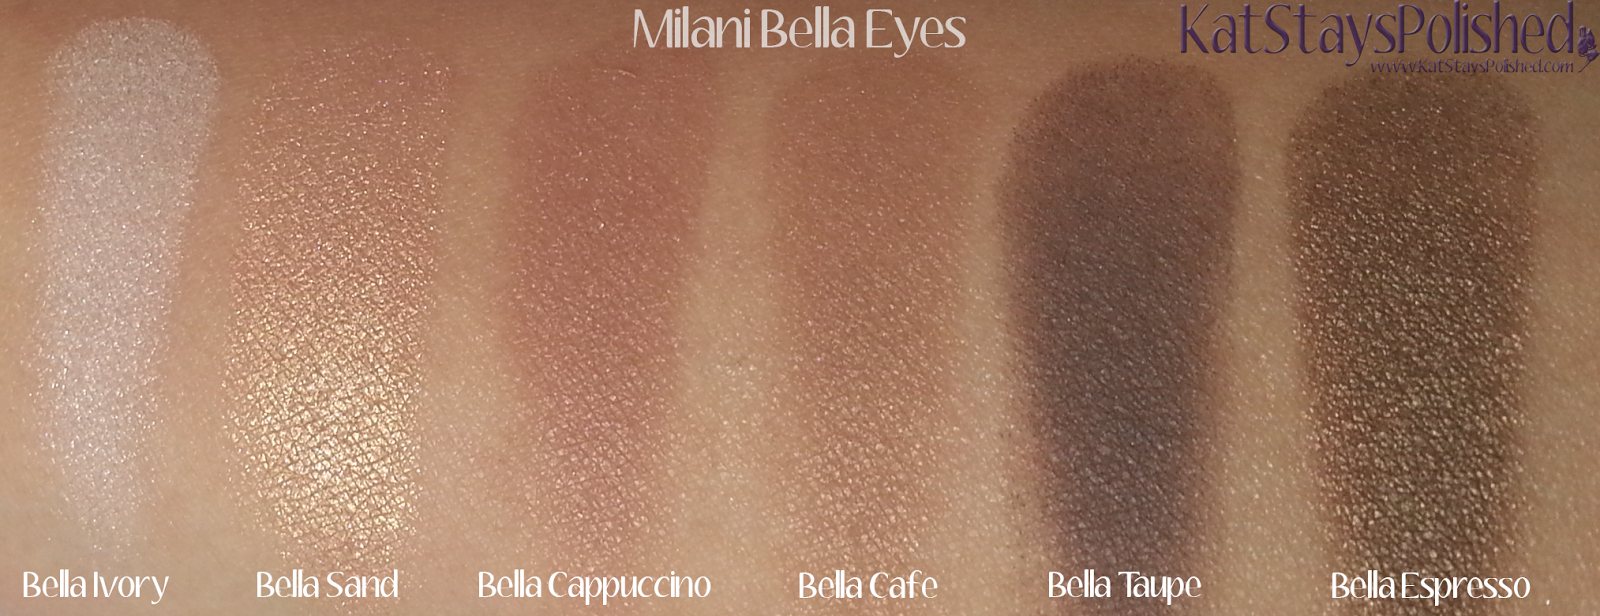 Milani Bella Eyes Gel Powder Eye Shadow - Swatches 01-06 | Kat Stays Polished